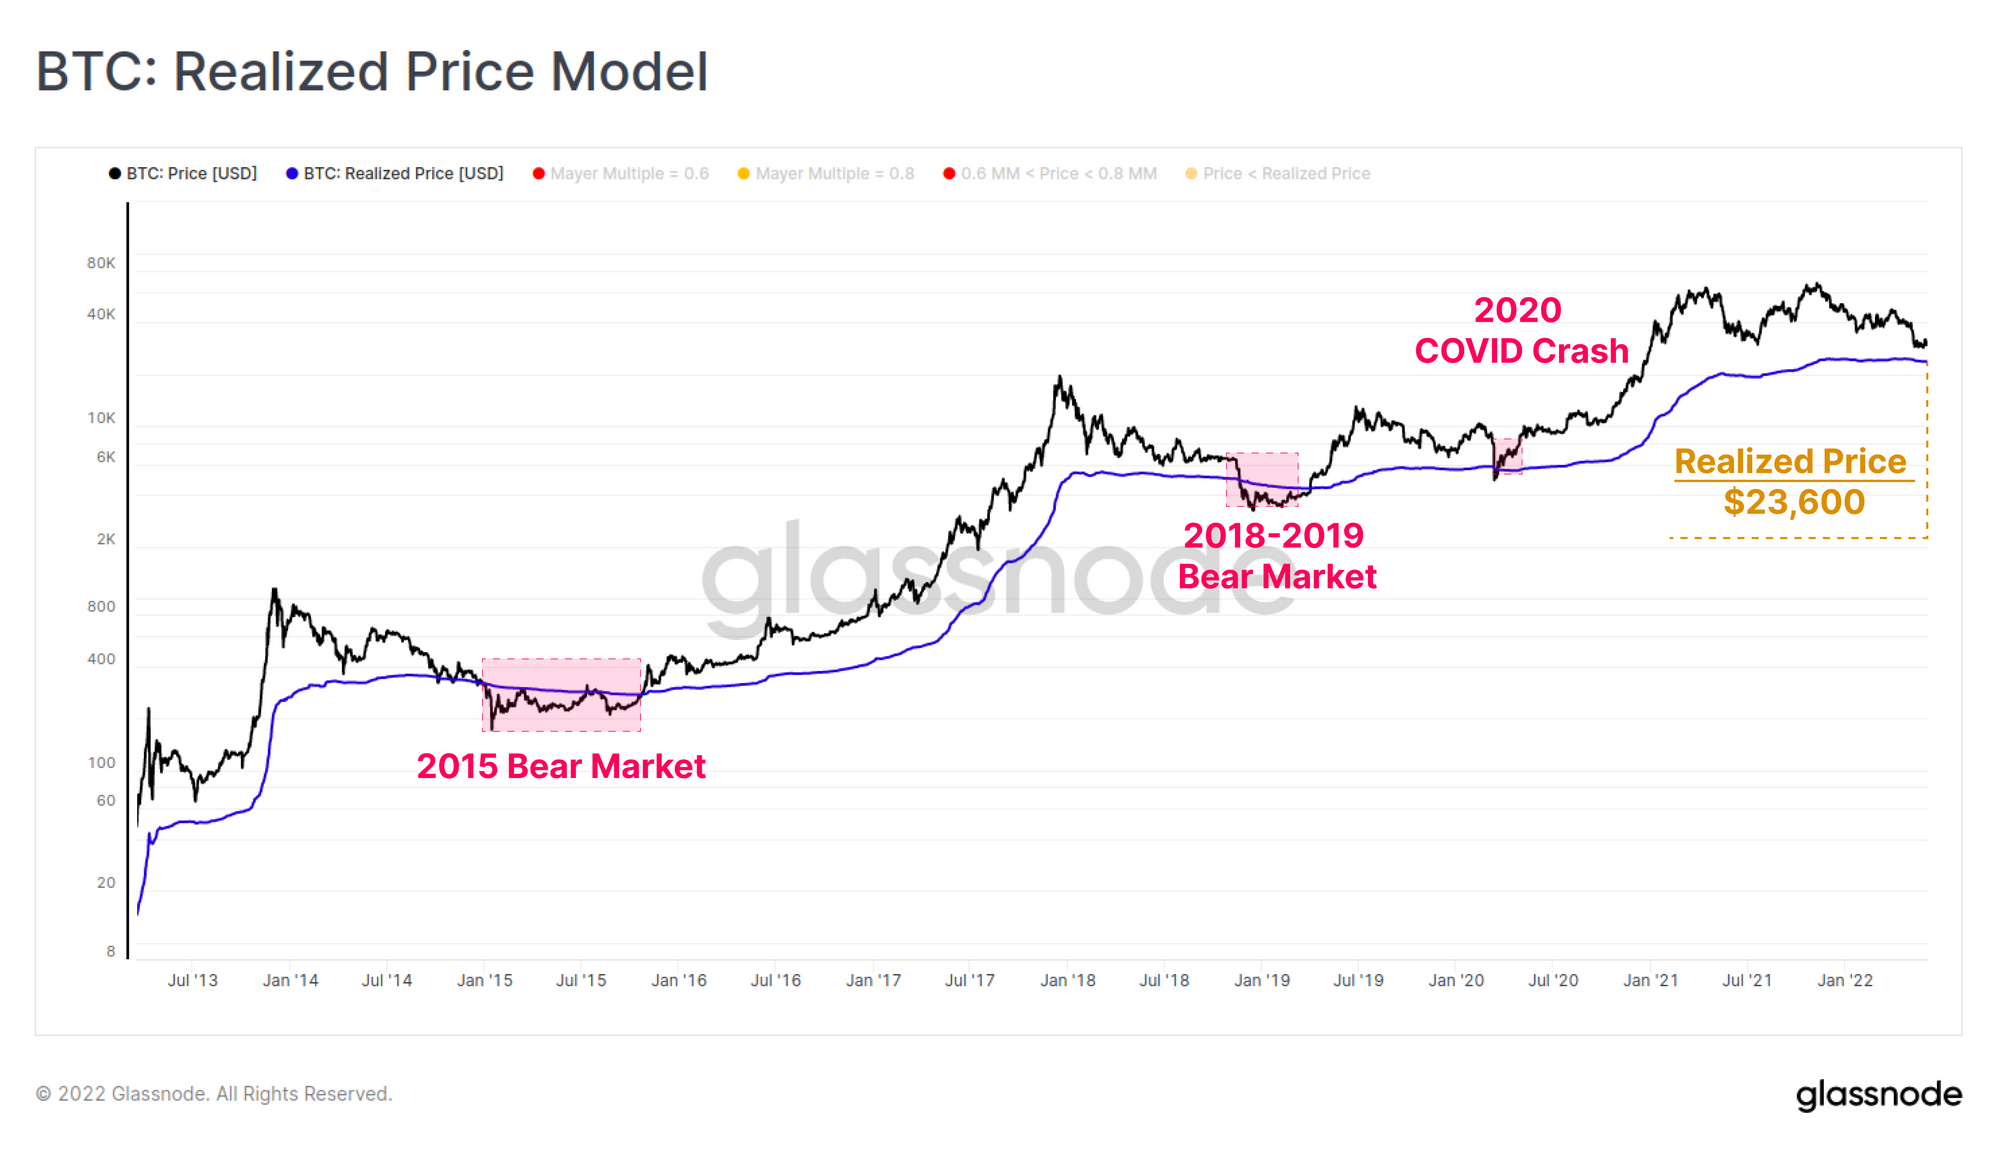 Bitcoin: Realized Price Model